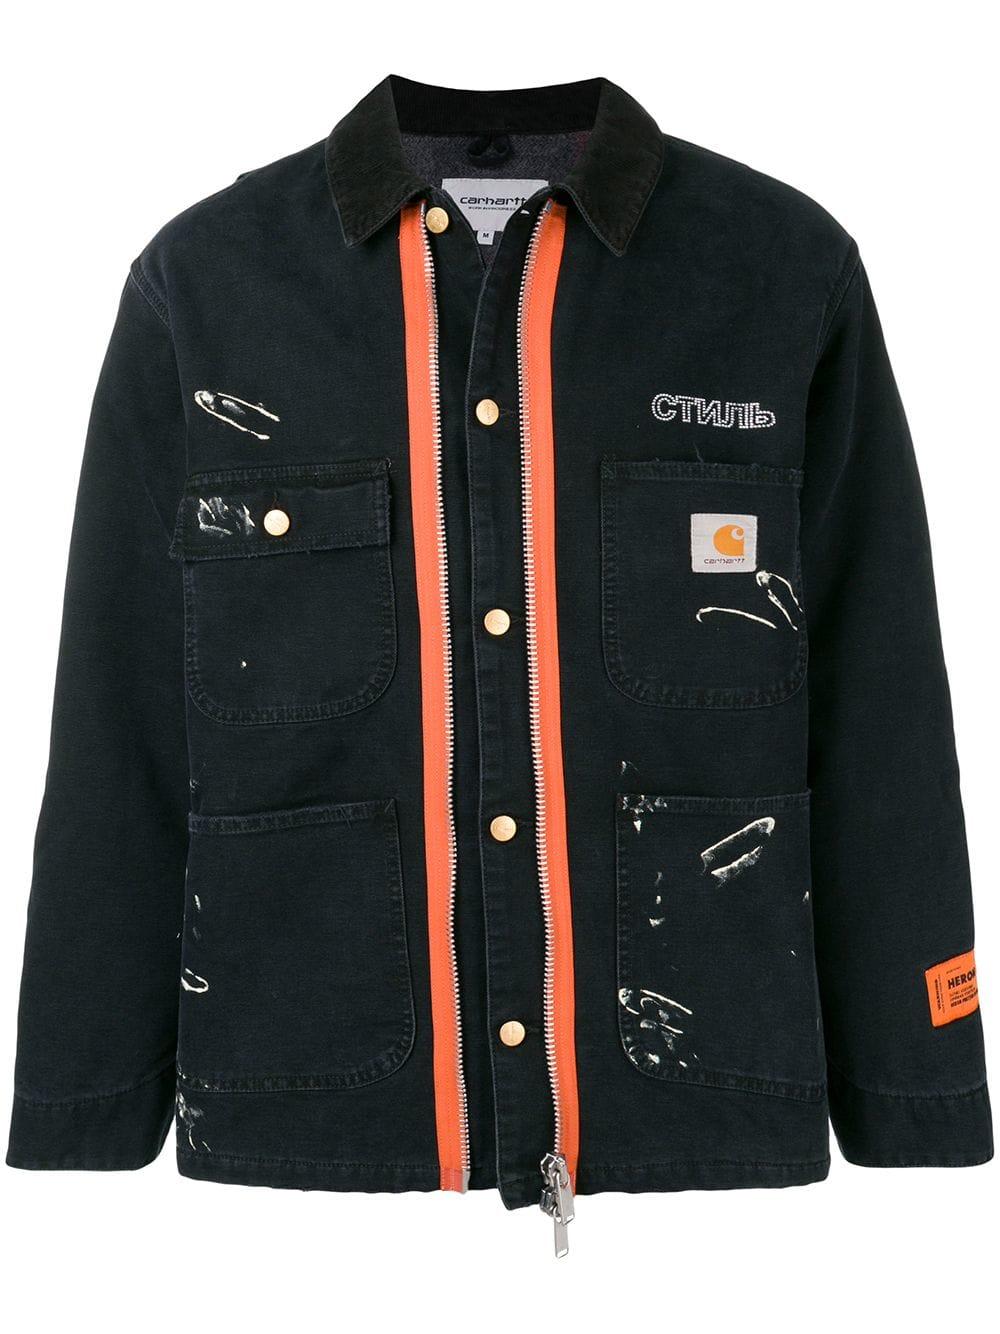 Heron Preston Cotton Customised Ctnmb Carhartt Contrast Zip Jacket in Black  for Men | Lyst